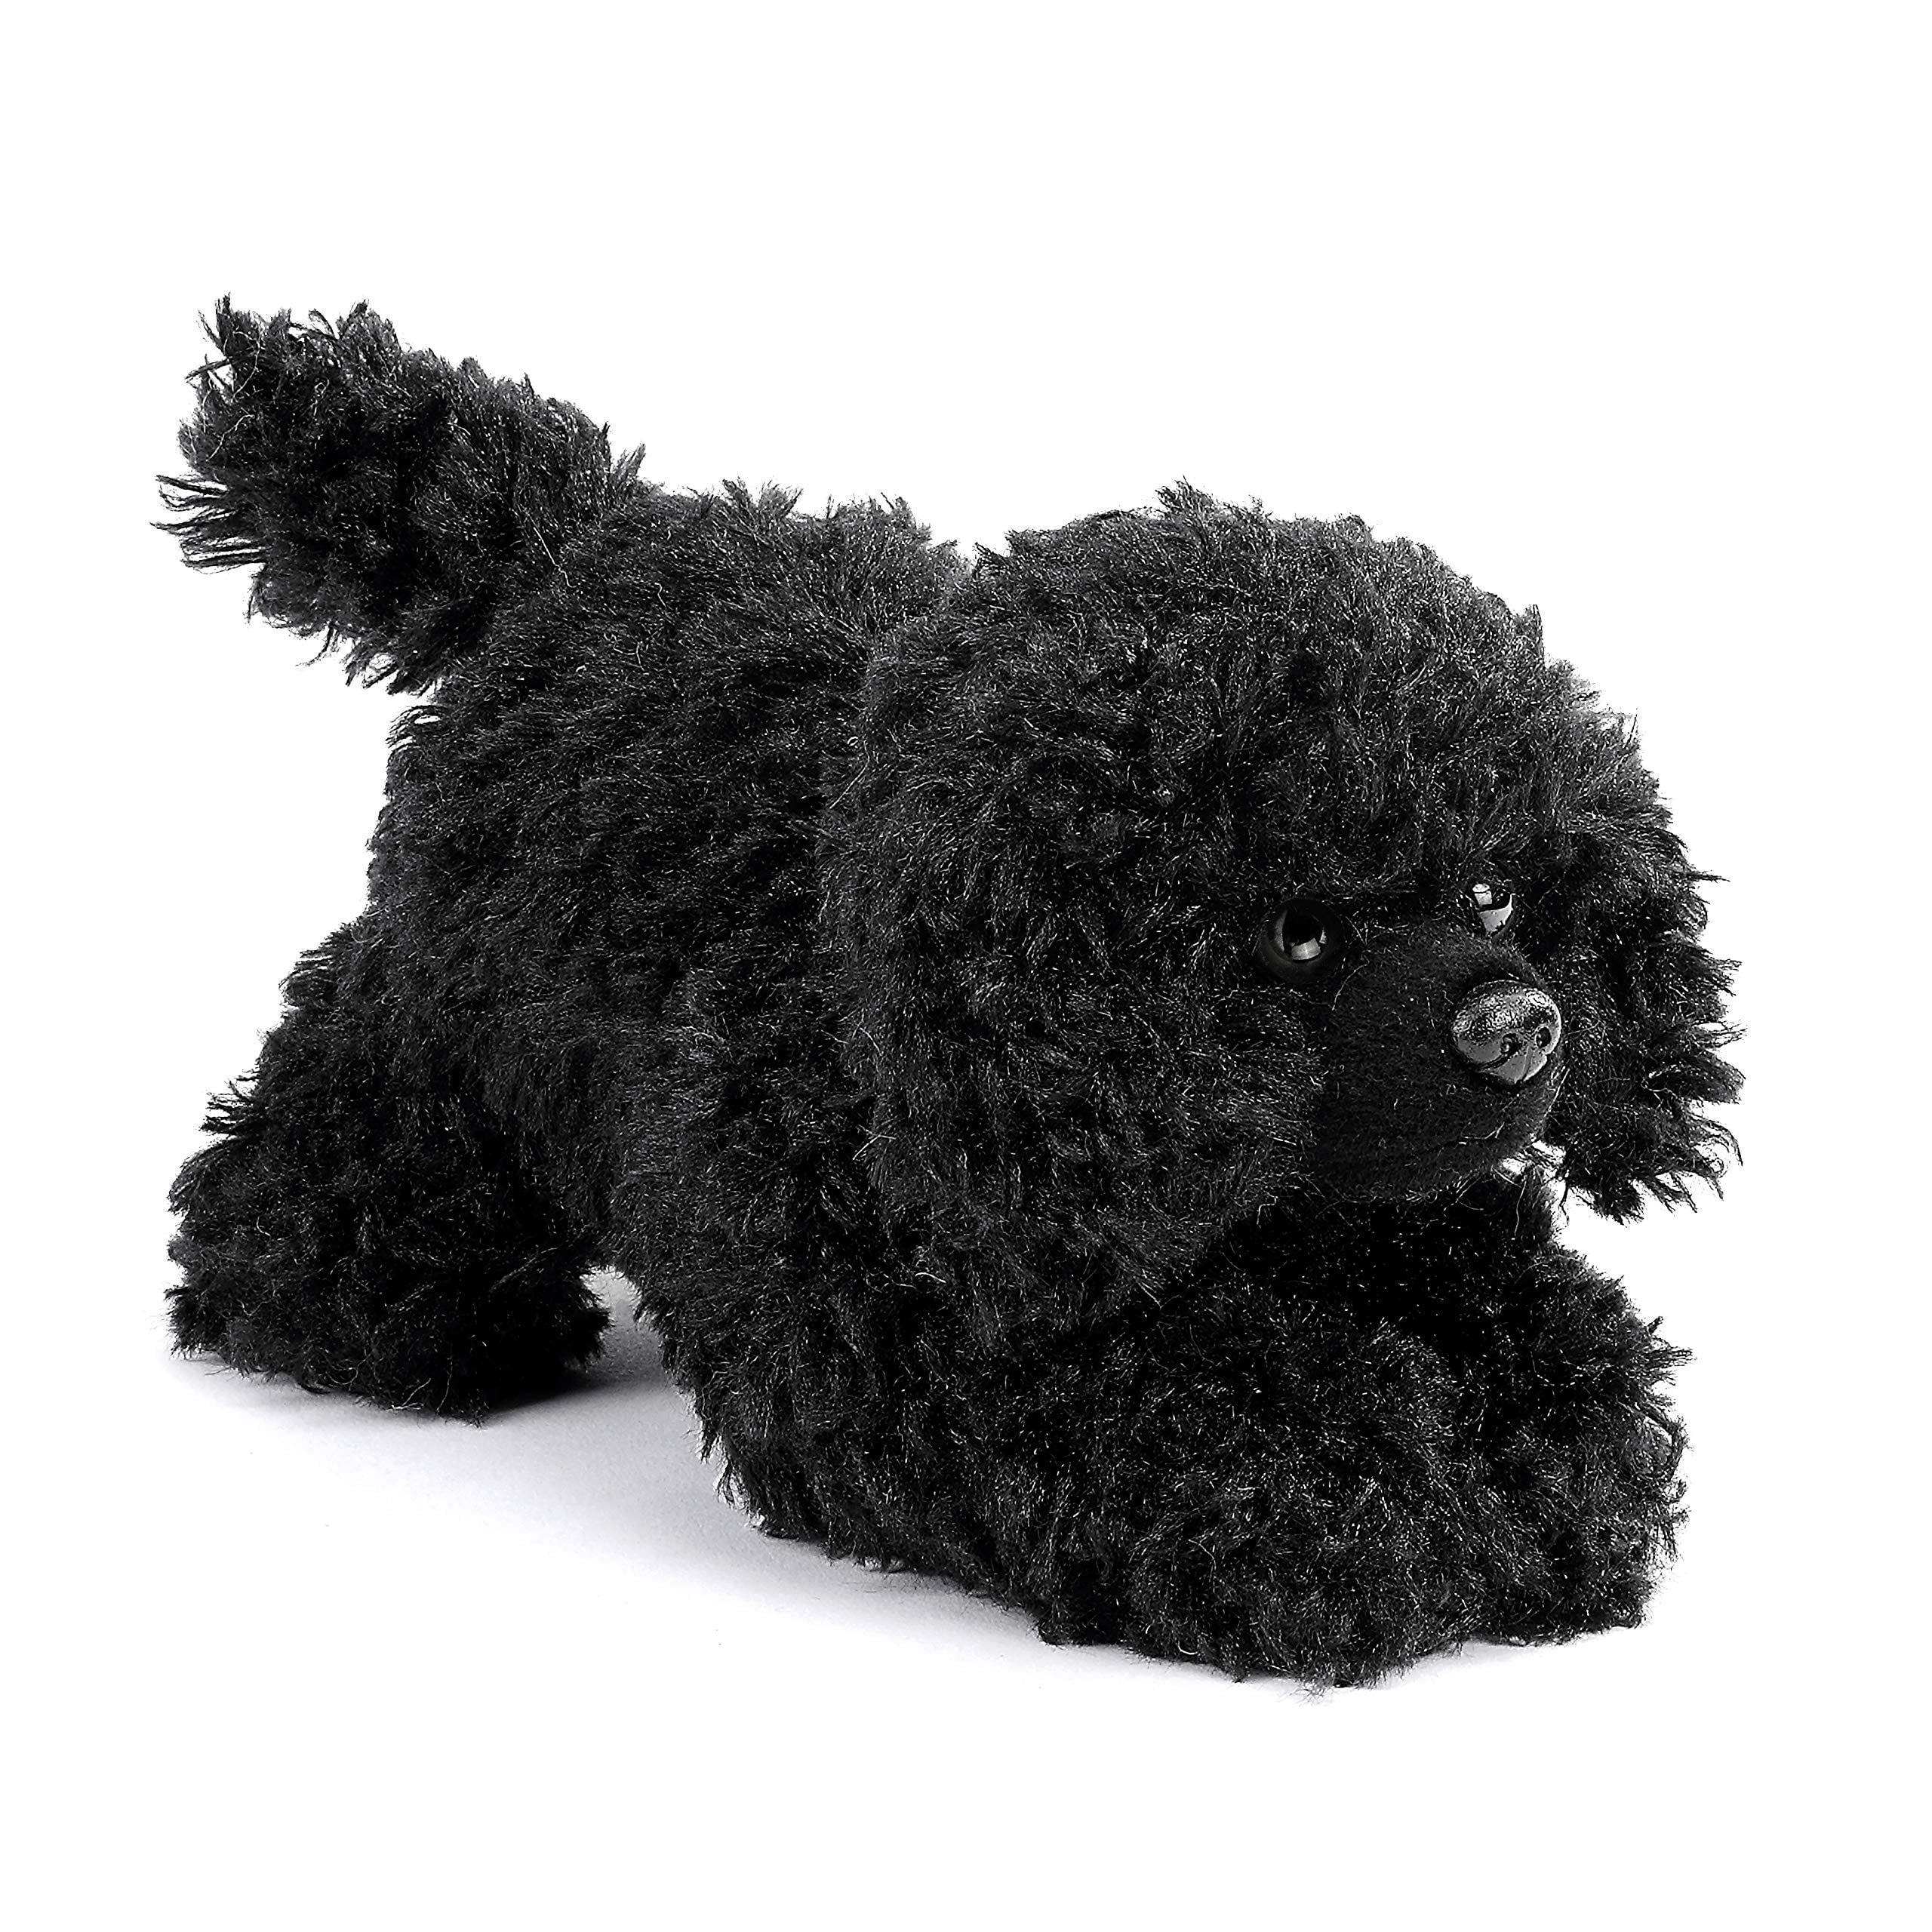 Details about   6.5" Poodle teddy BLACK POODLES plush toy dog soft toys dogs teddies animals 